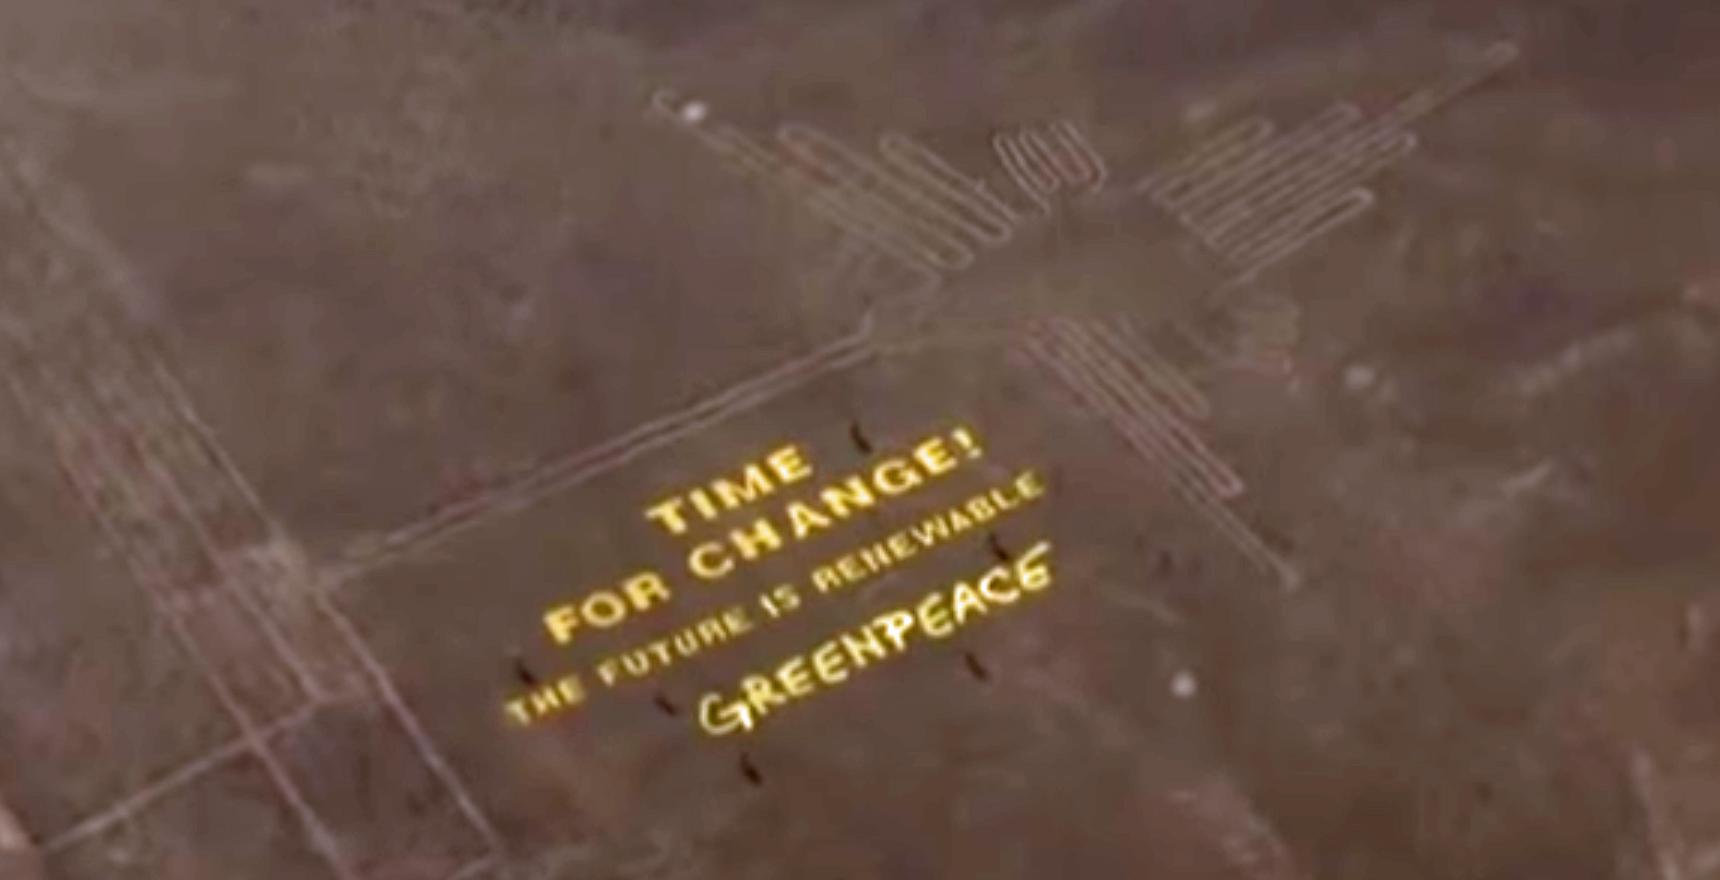 Greenpeace message next to Peru's Nazca Lines.